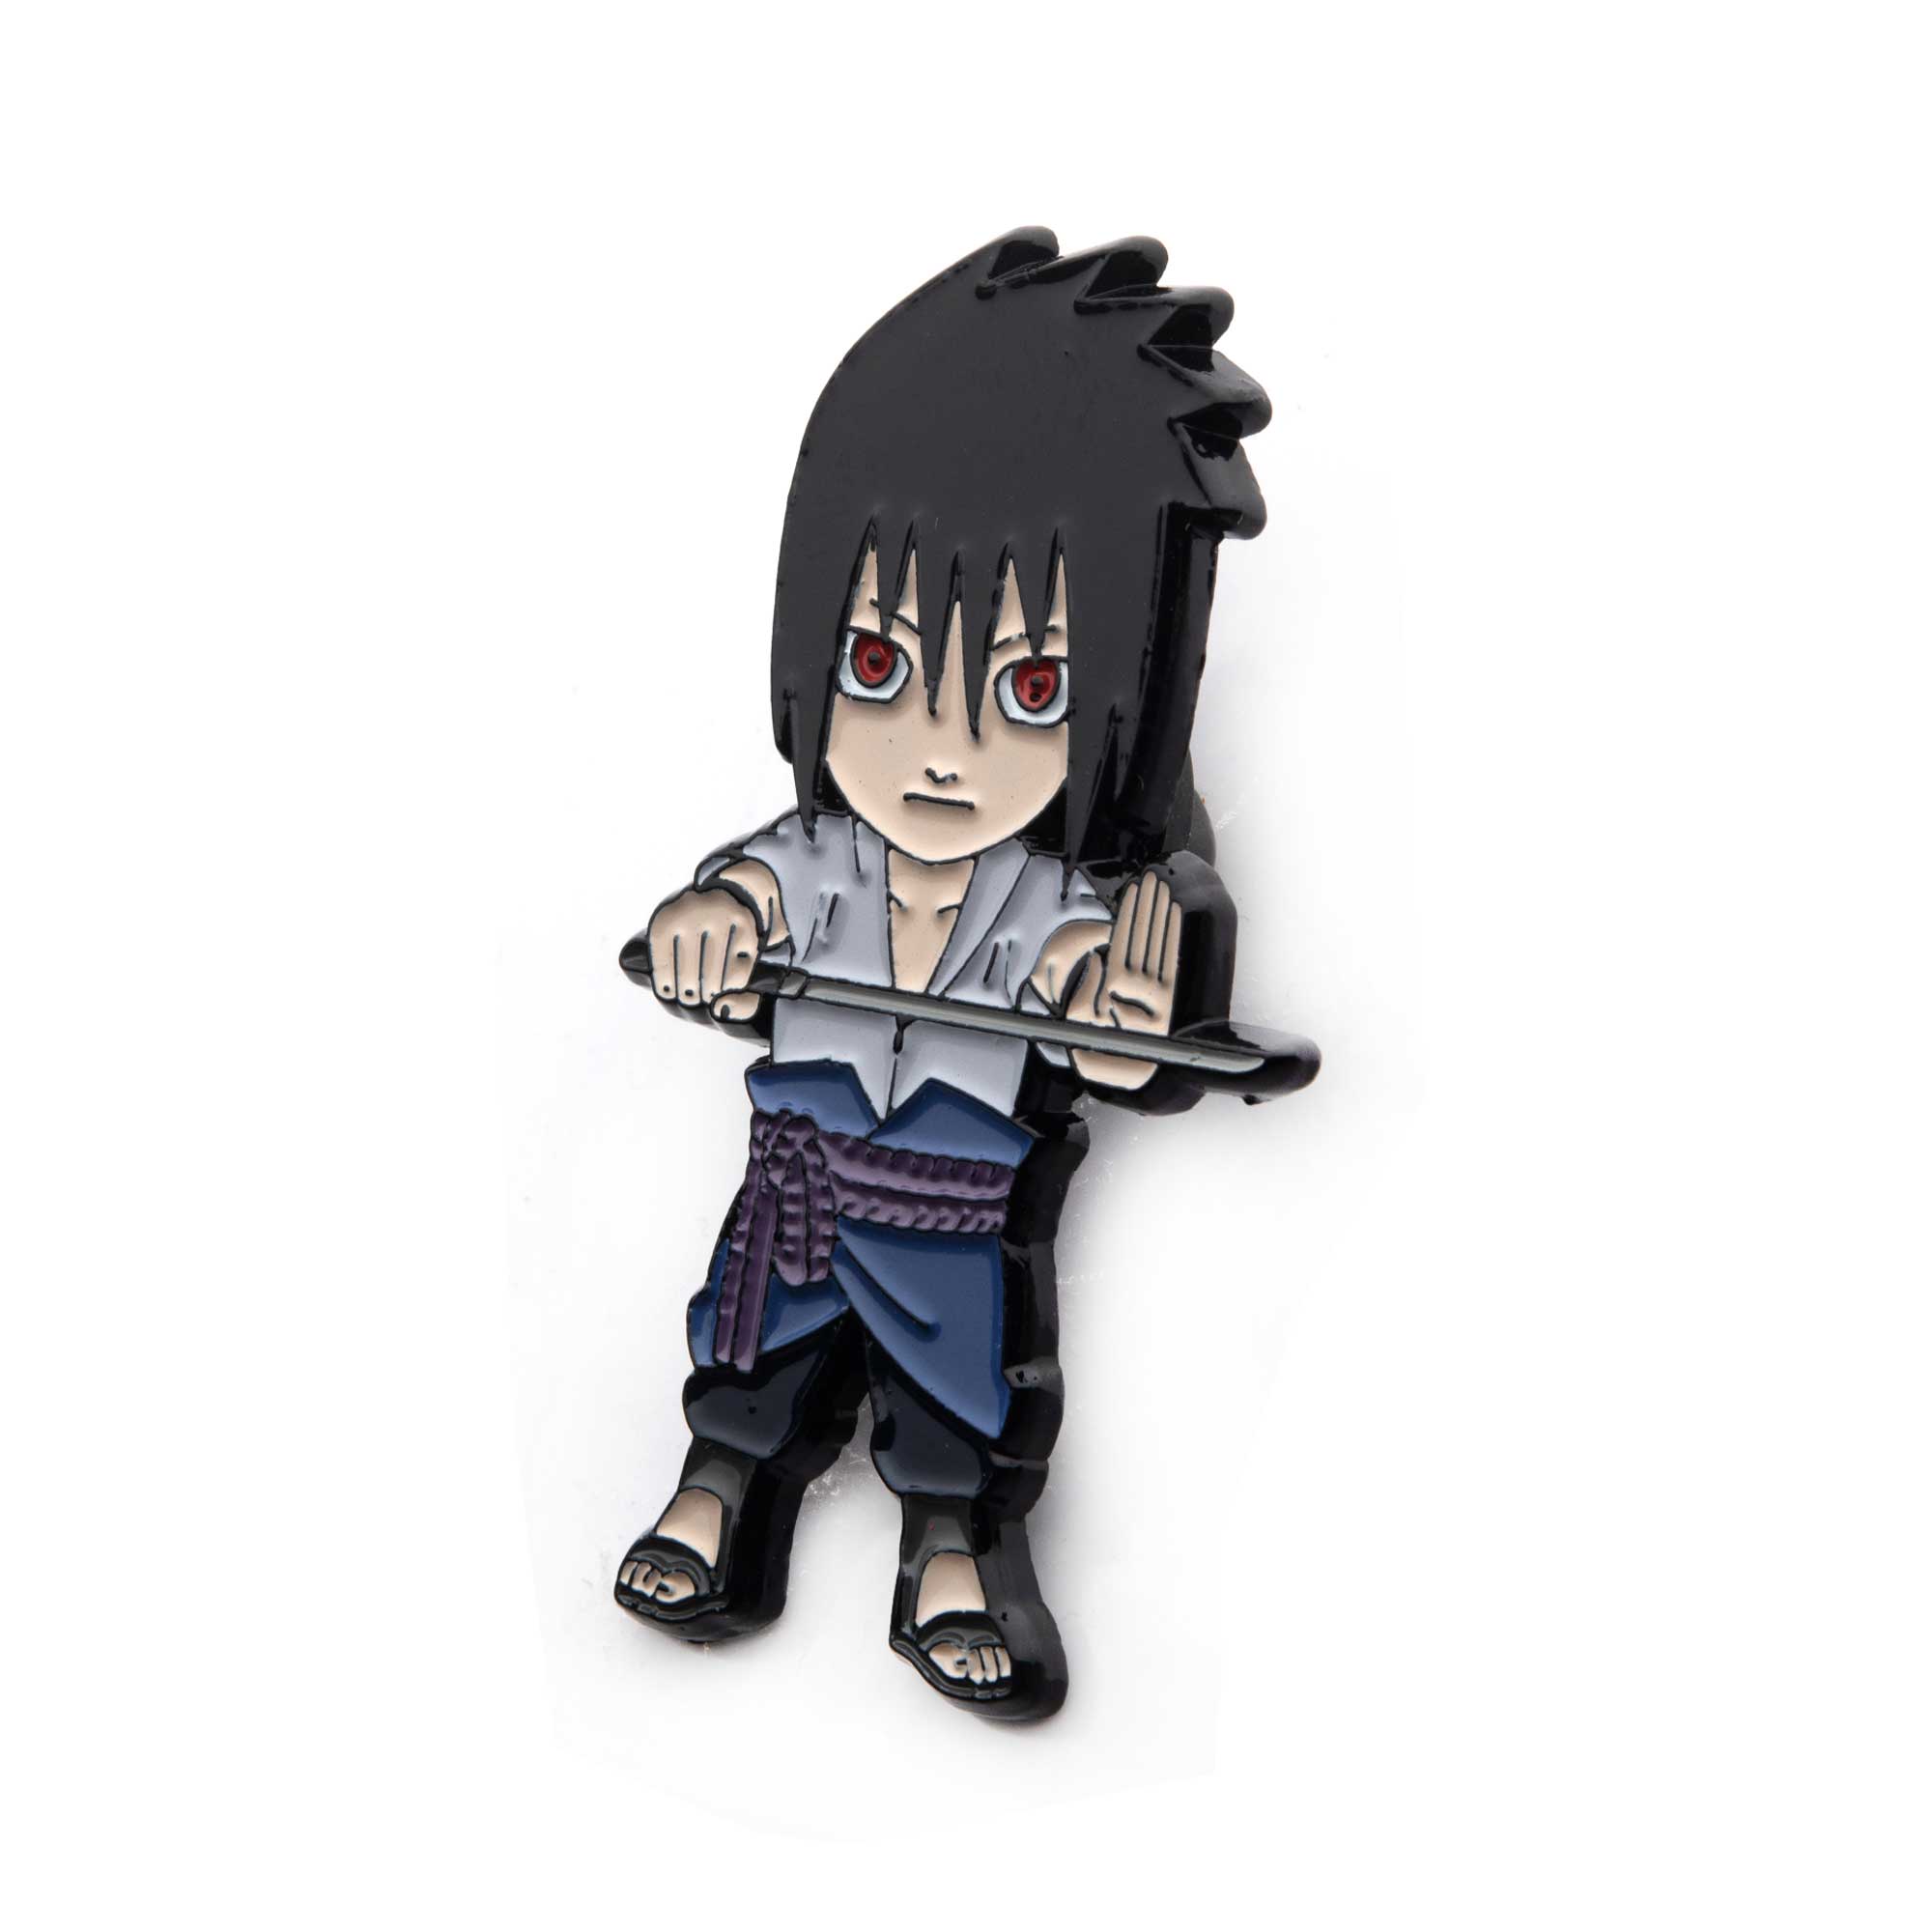 Naruto Shippuden Chibi Sasuke Lapel Pin